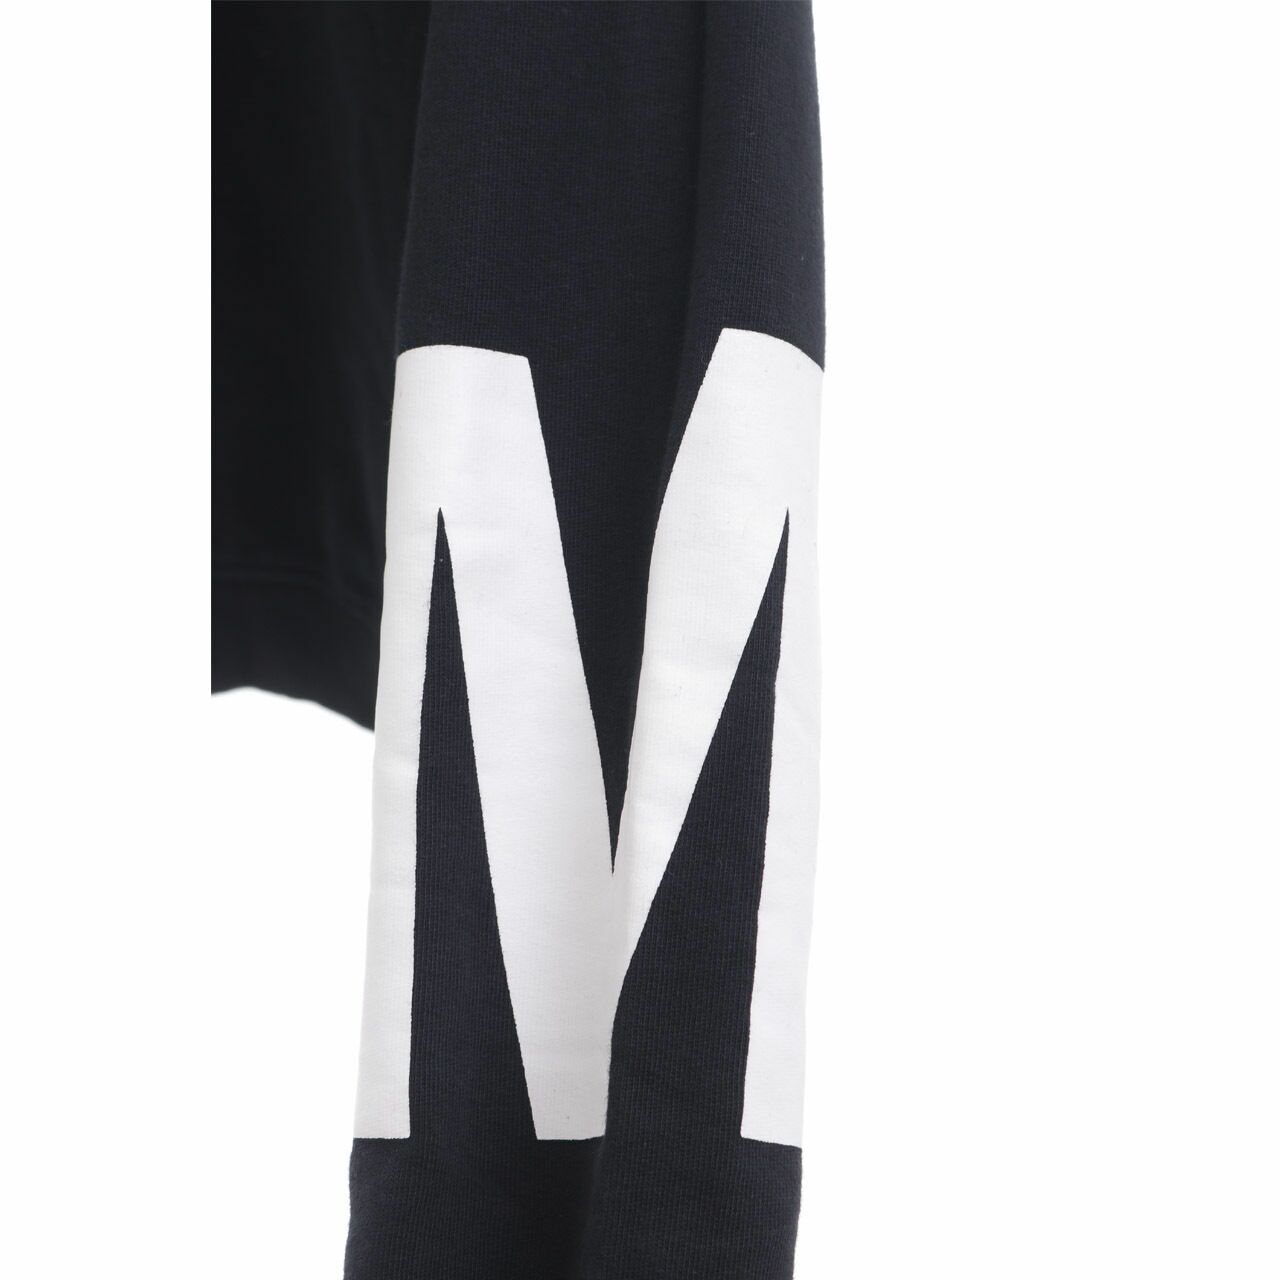 H&M Black Sweatshirt